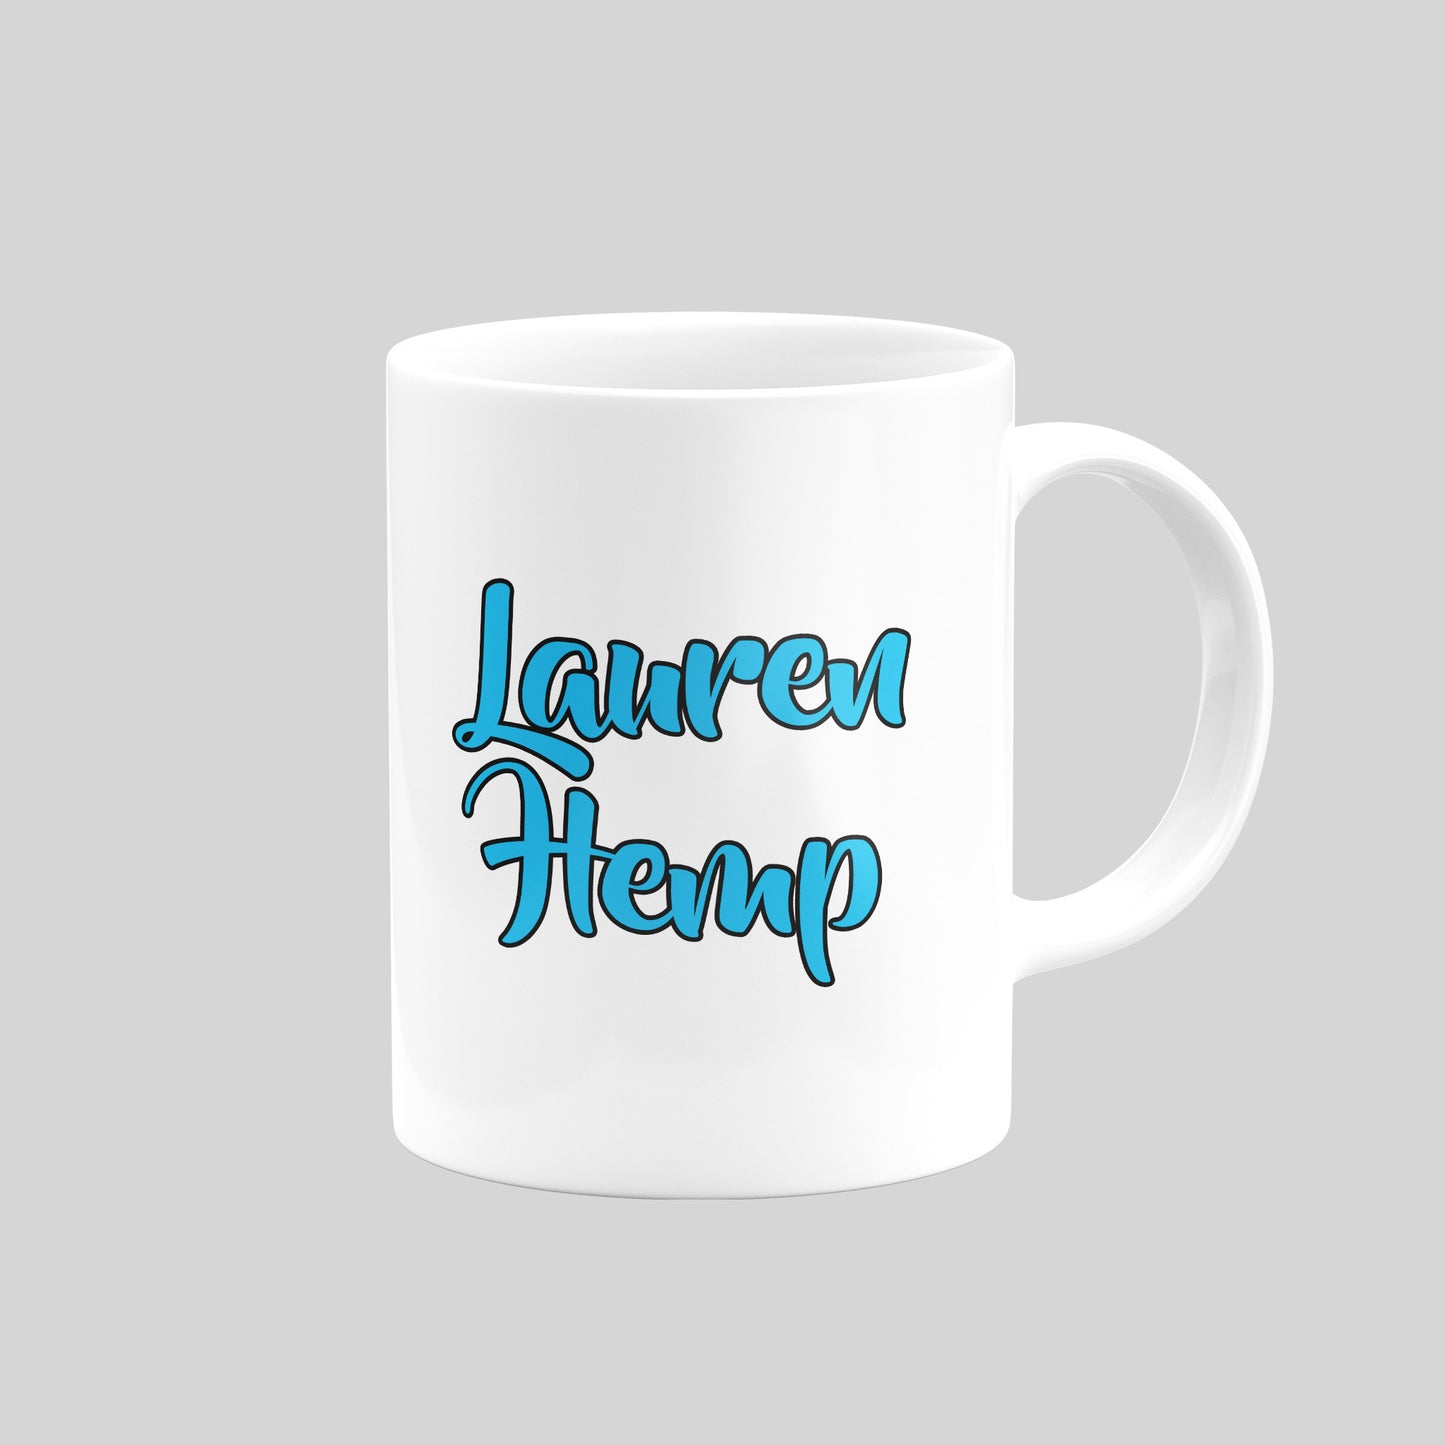 Lauren Hemp Man City Mug